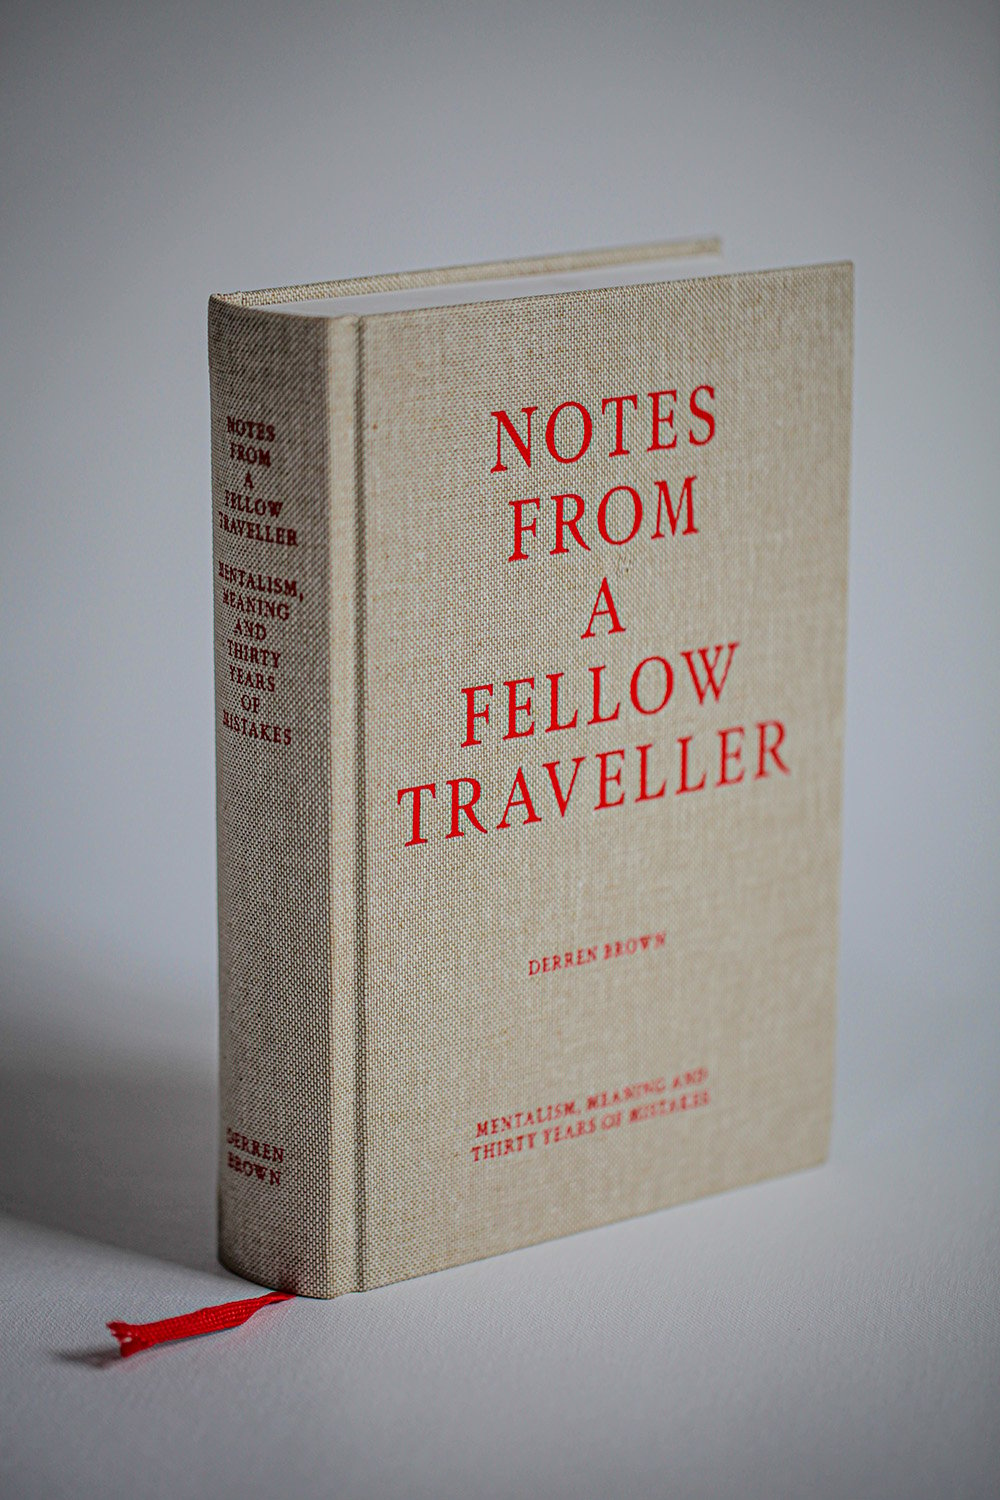 a fellow traveller summary pdf